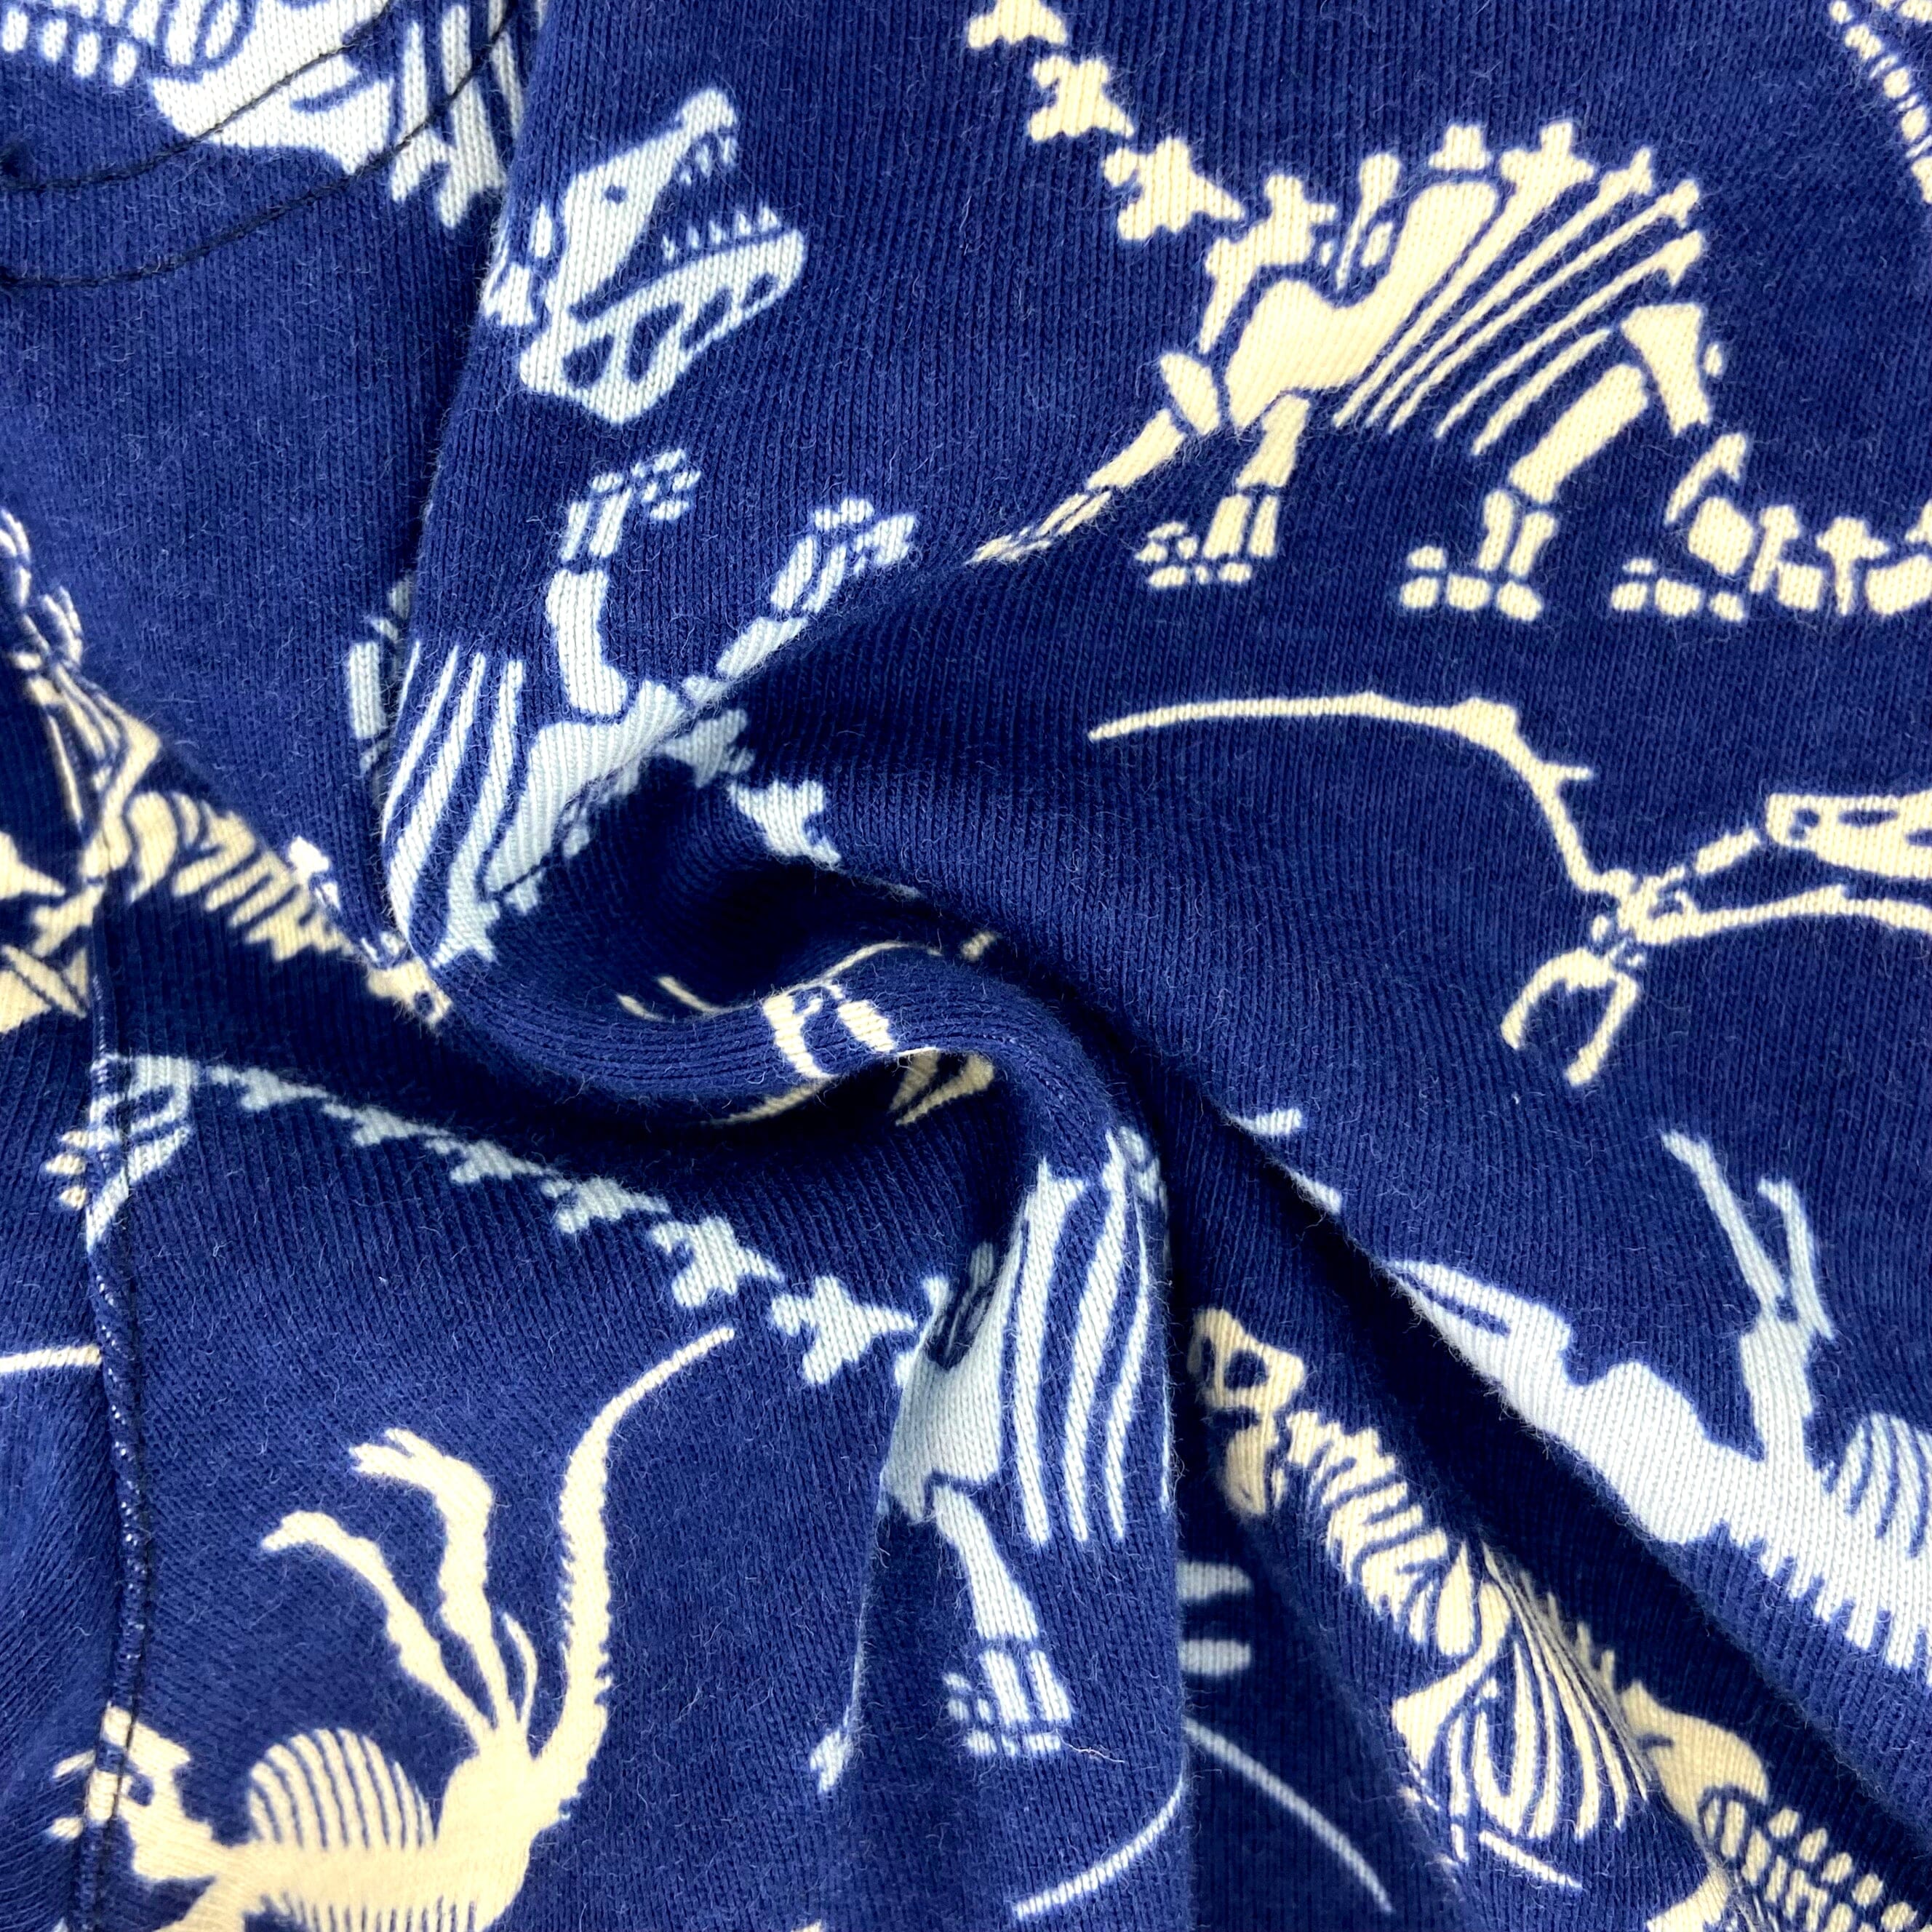 Men's Dinosaur Fossil All Over Print Cotton Knit Pyjama Sleep Shorts